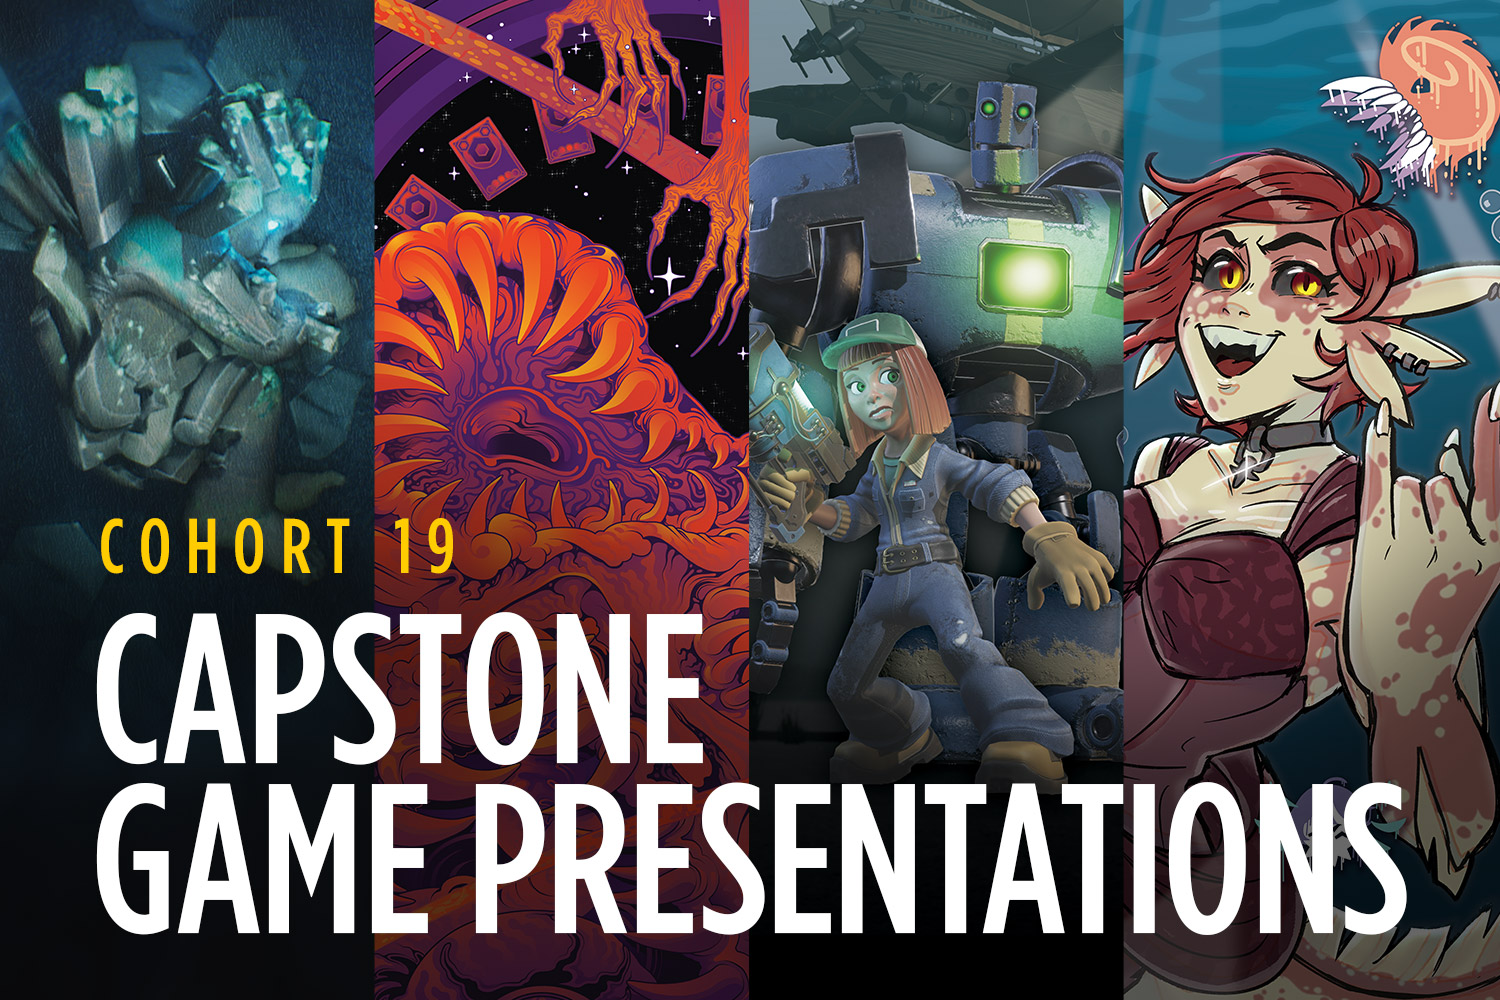 Capstone Game Presentations for Cohort 19